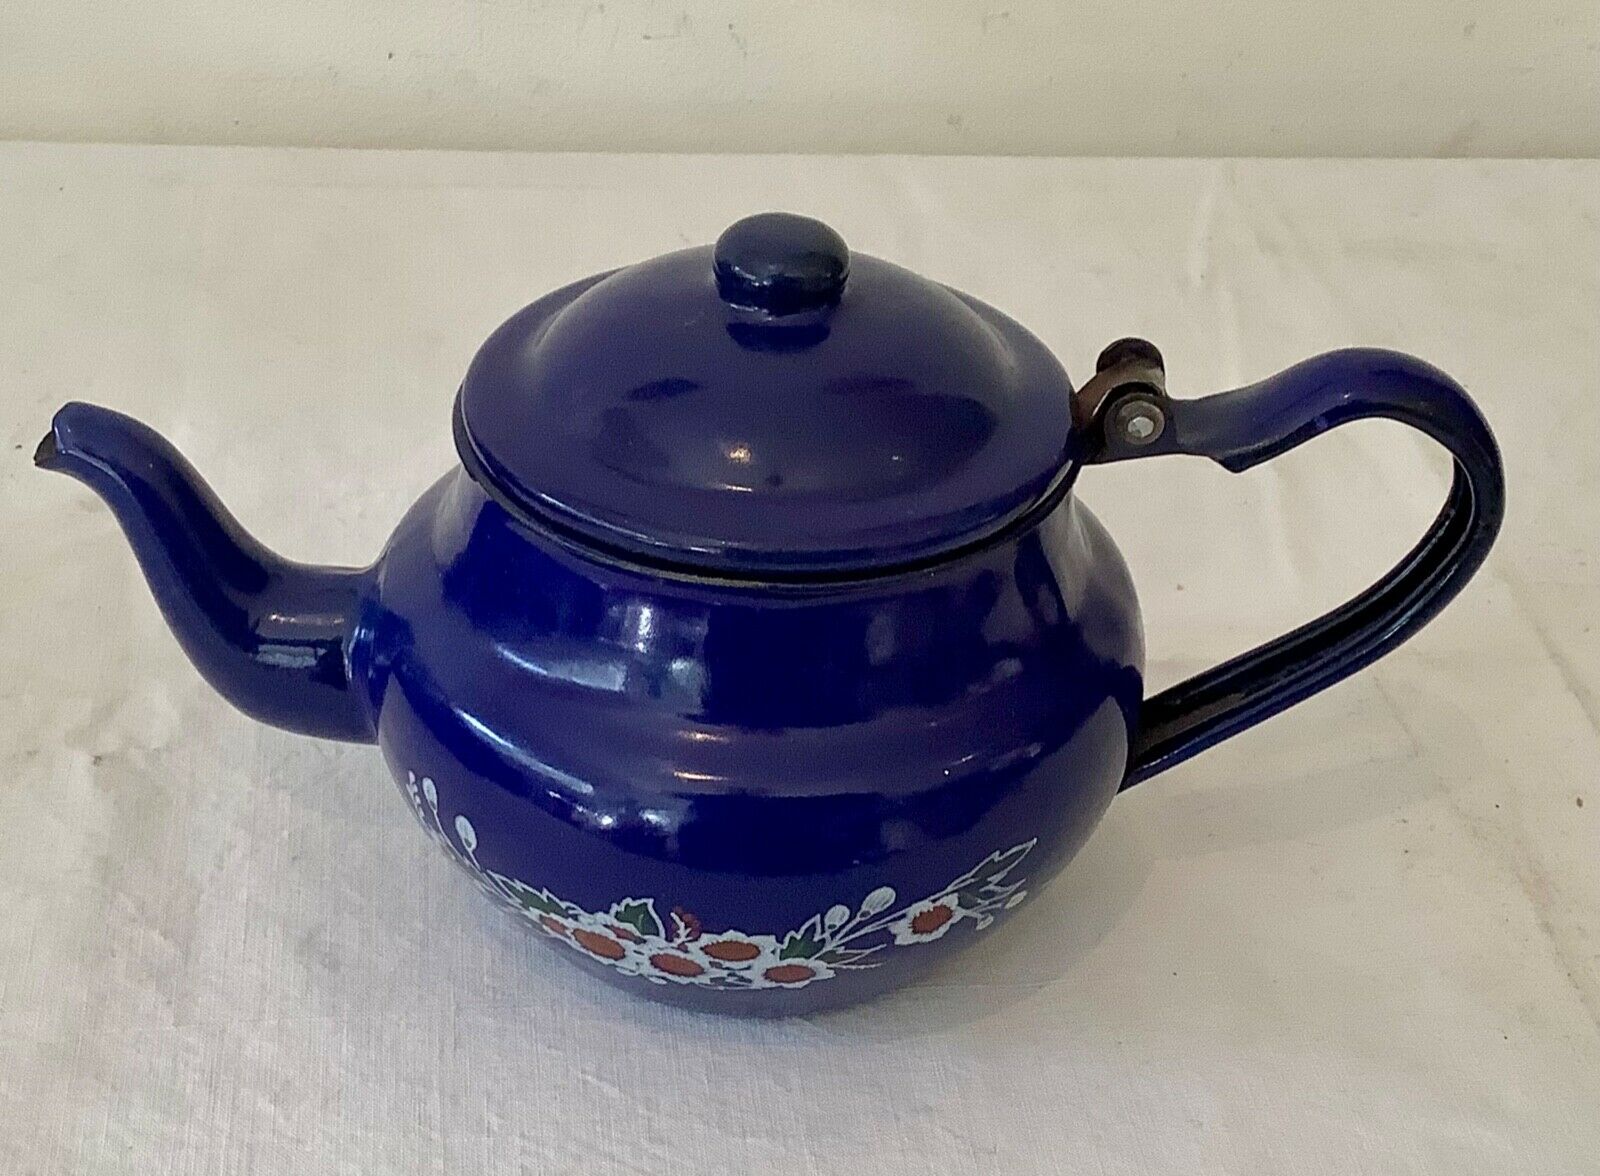 Vintage enamel teapot home decor flower pot made in USSR 1950s